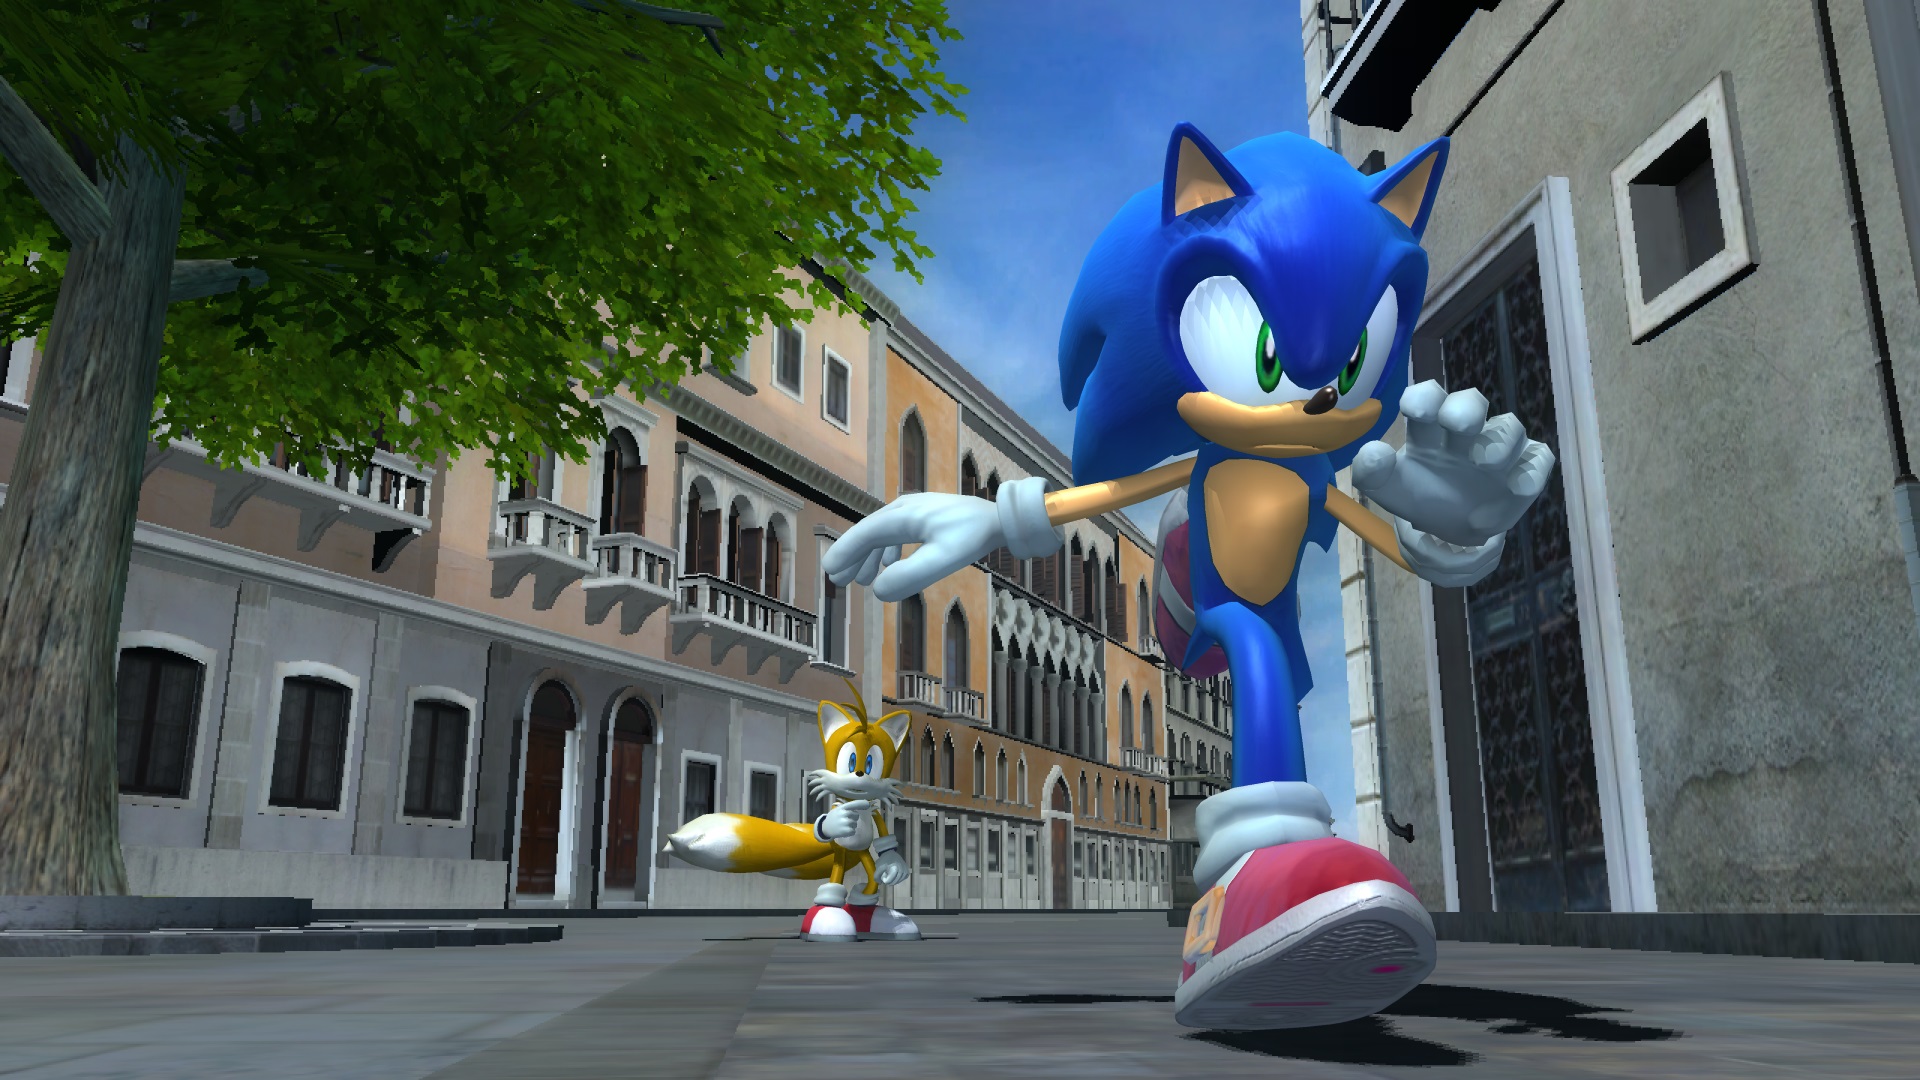 Home sonic. Sonic the Hedgehog (игра, 2006). Соник 2006. Sonic the Hedgehog 2006. Sonic 2006 v'игра.